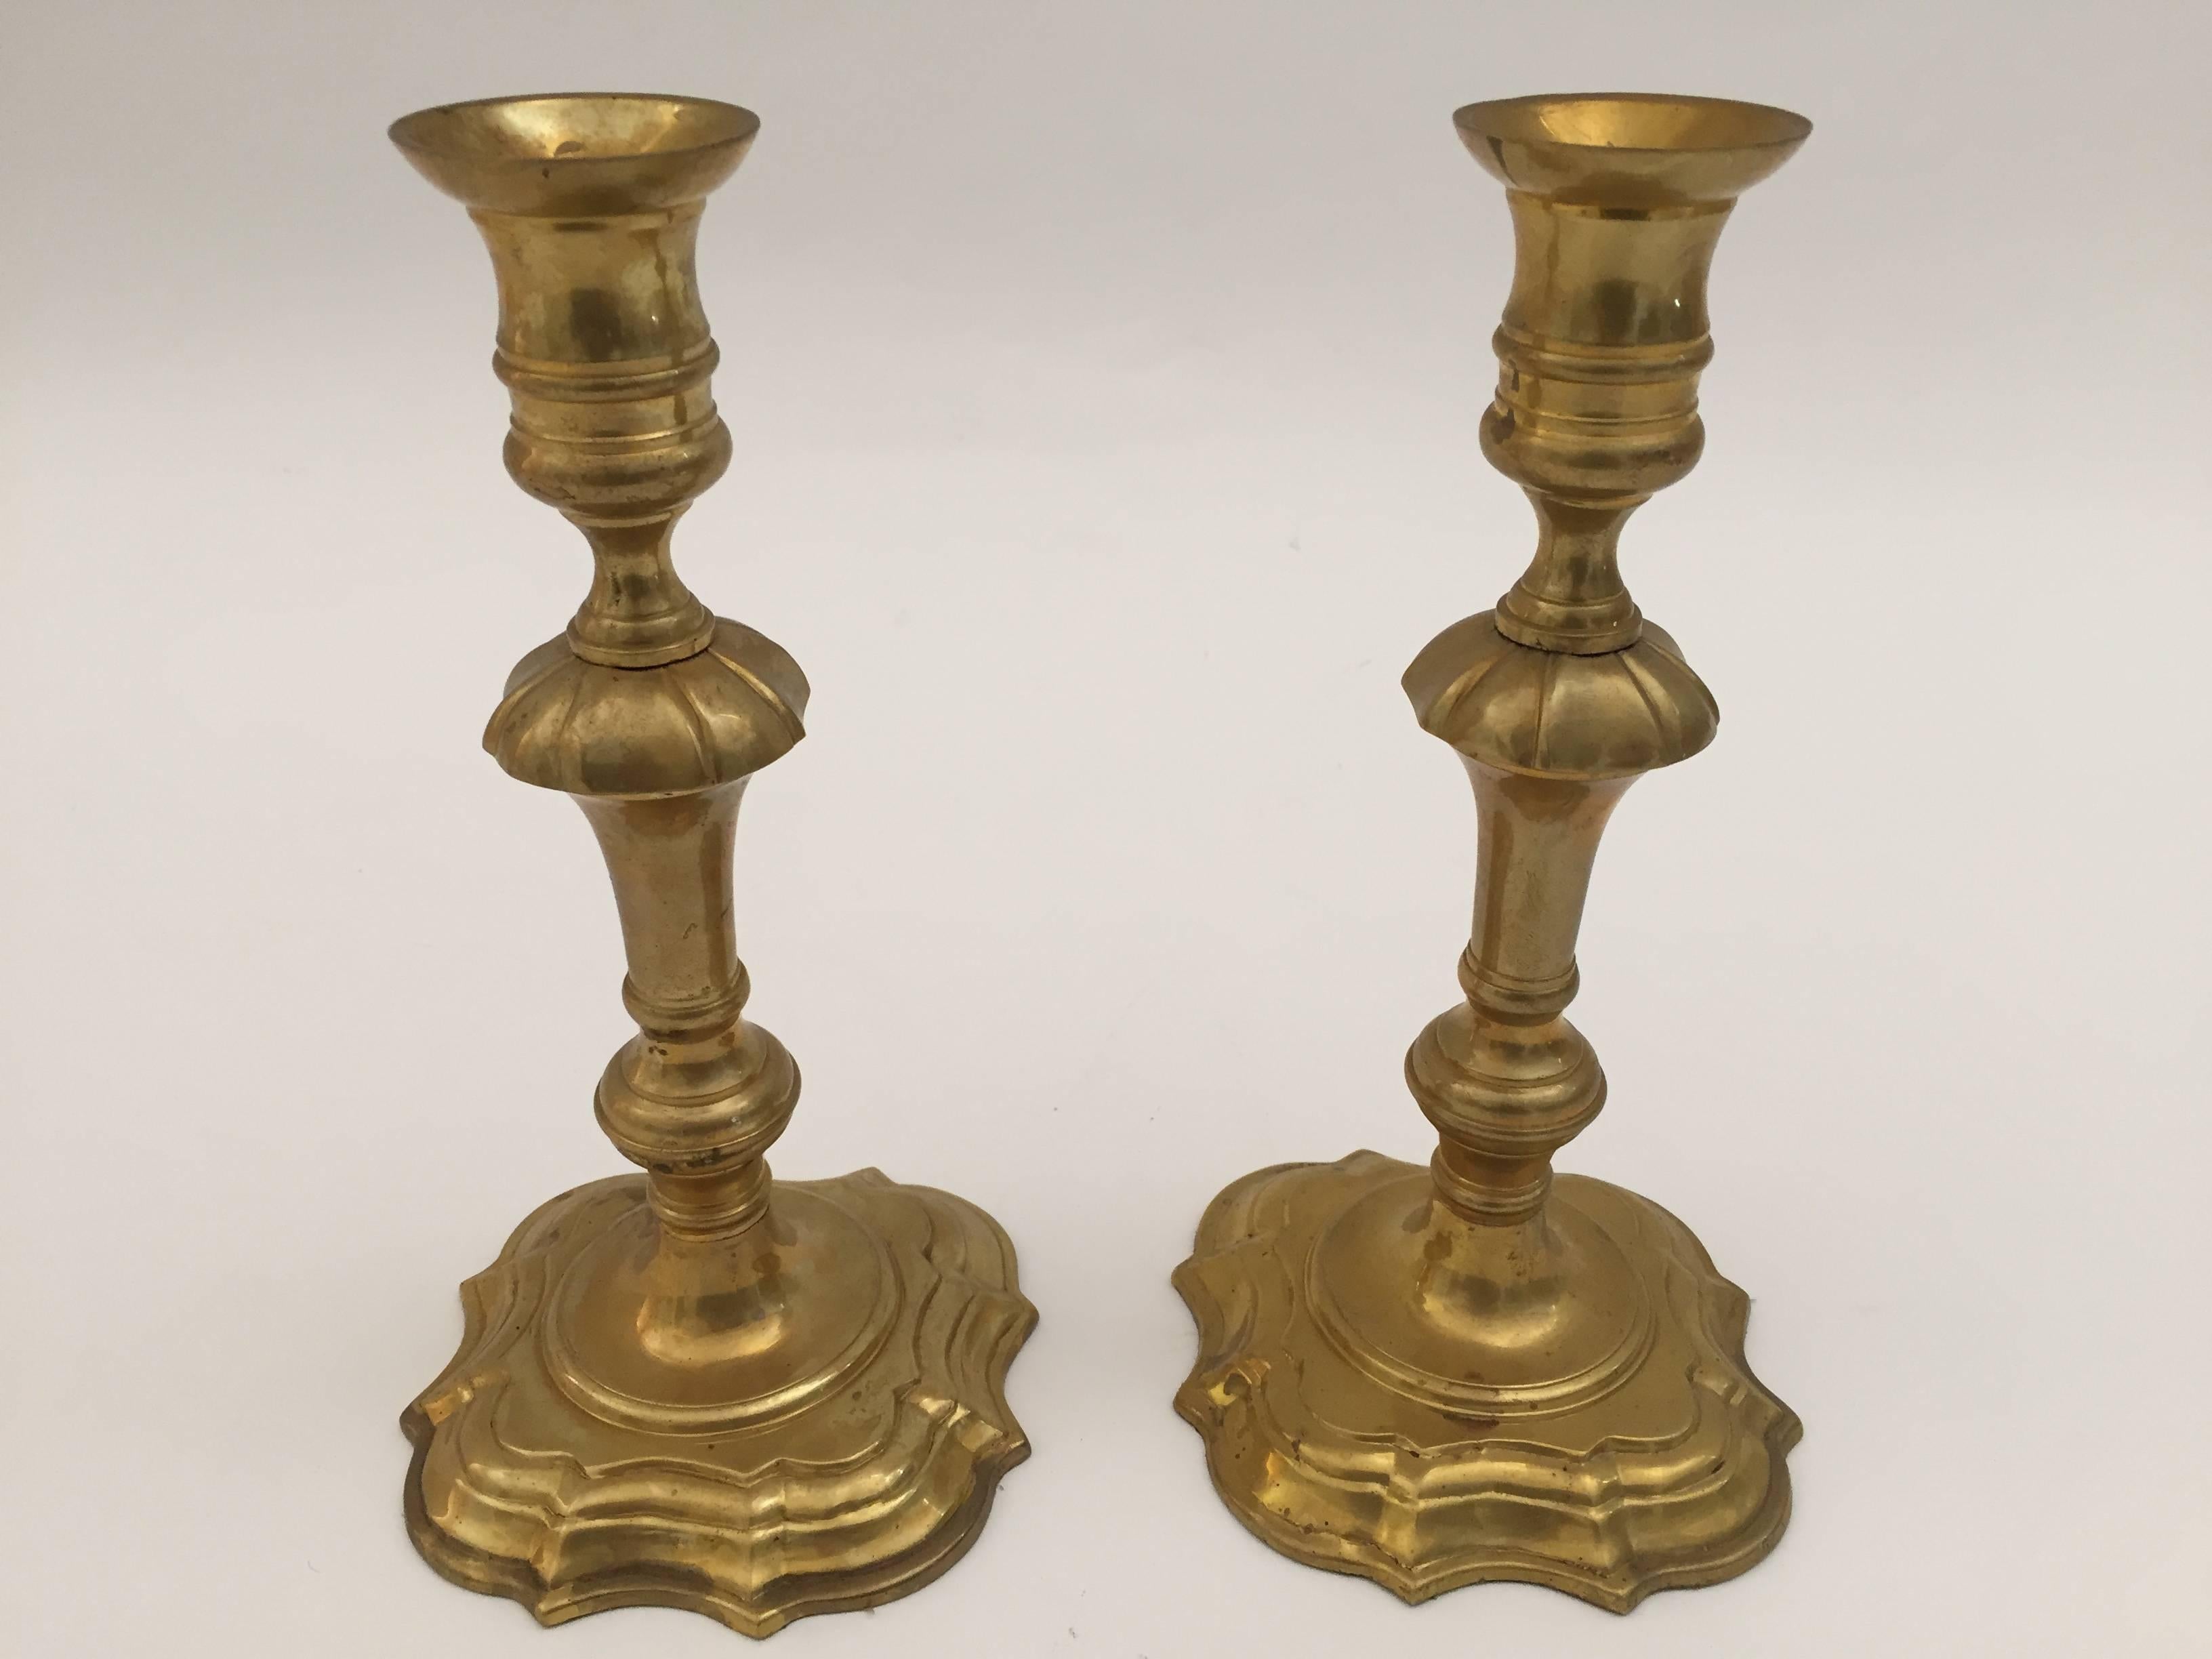 Hand-Crafted Pair of Georgian Brass Candlesticks